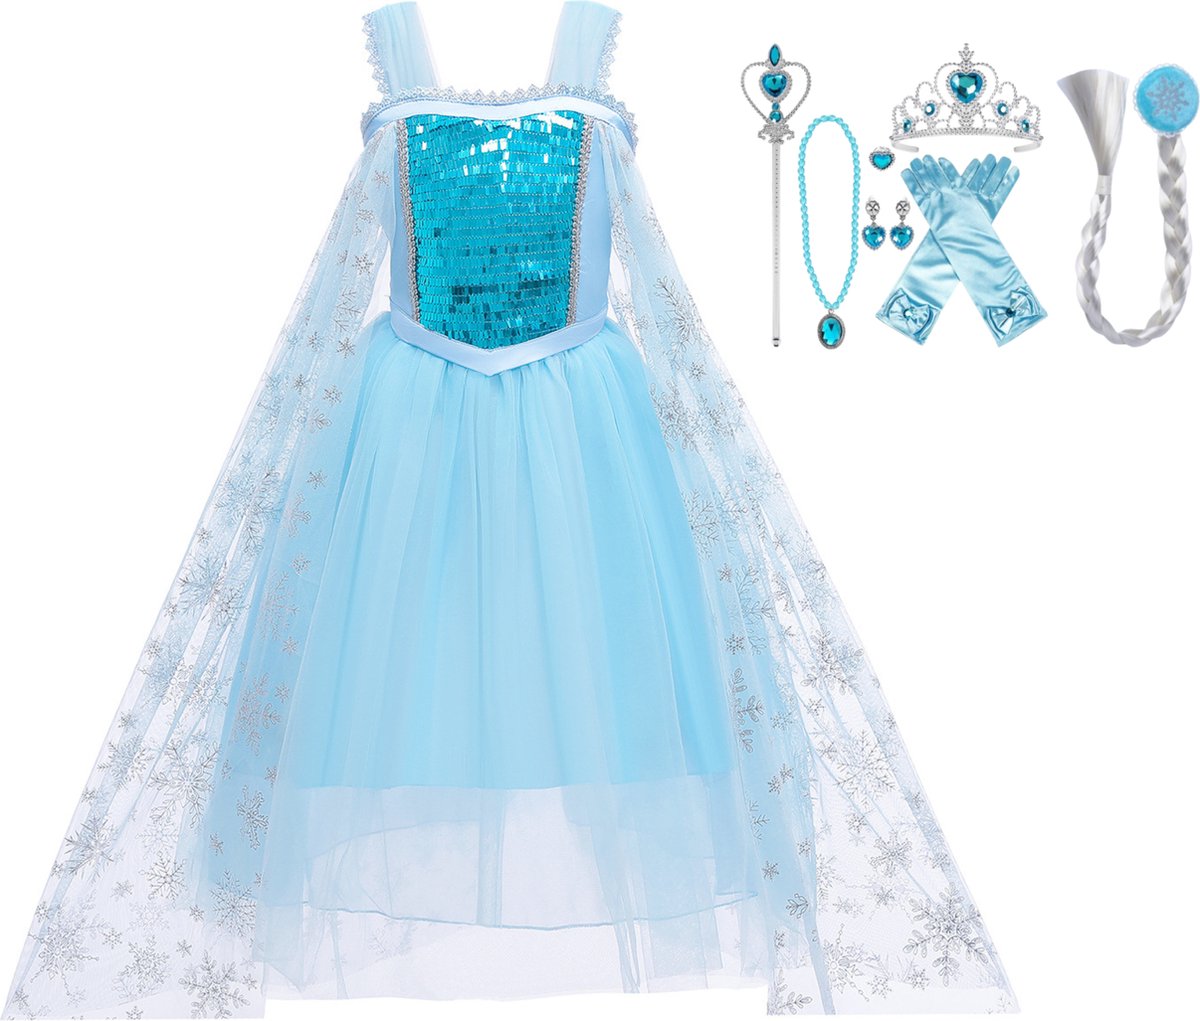 Joya Kids® Blauwe Prinsessenjurk meisje | Luxe Verkleedjurk + Accessoires set | Verkleedkleding | Prinsessen speelgoed | Carnaval | Cadeau Meisje Sinterklaas | Maat 122-128 (130)